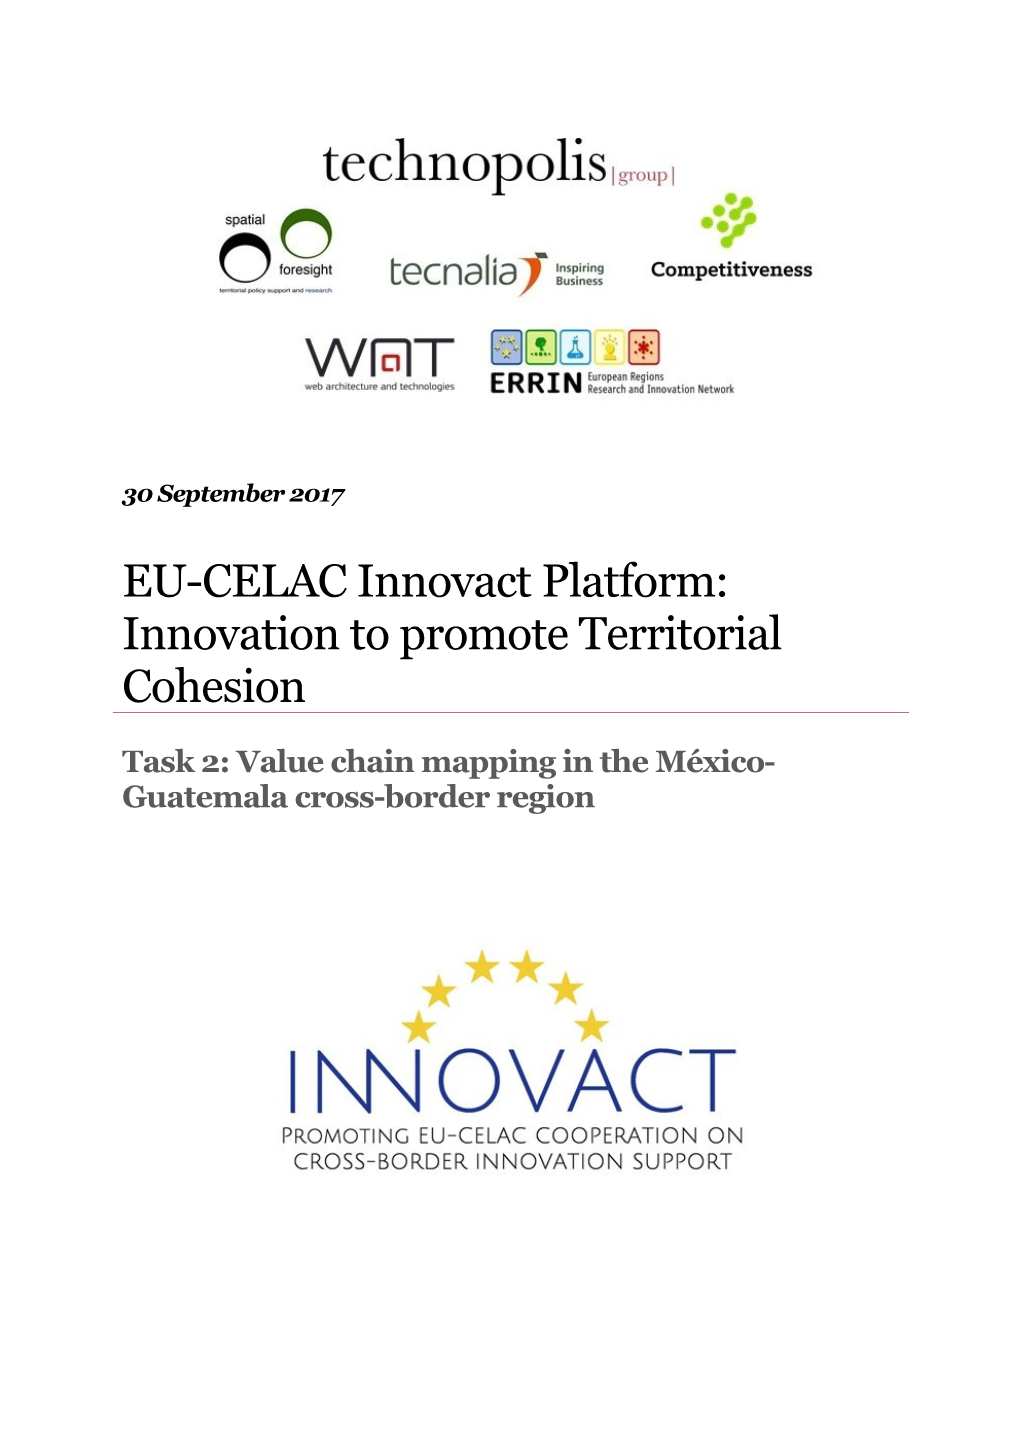 EU-CELAC Innovact Platform: Innovation to Promote Territorial